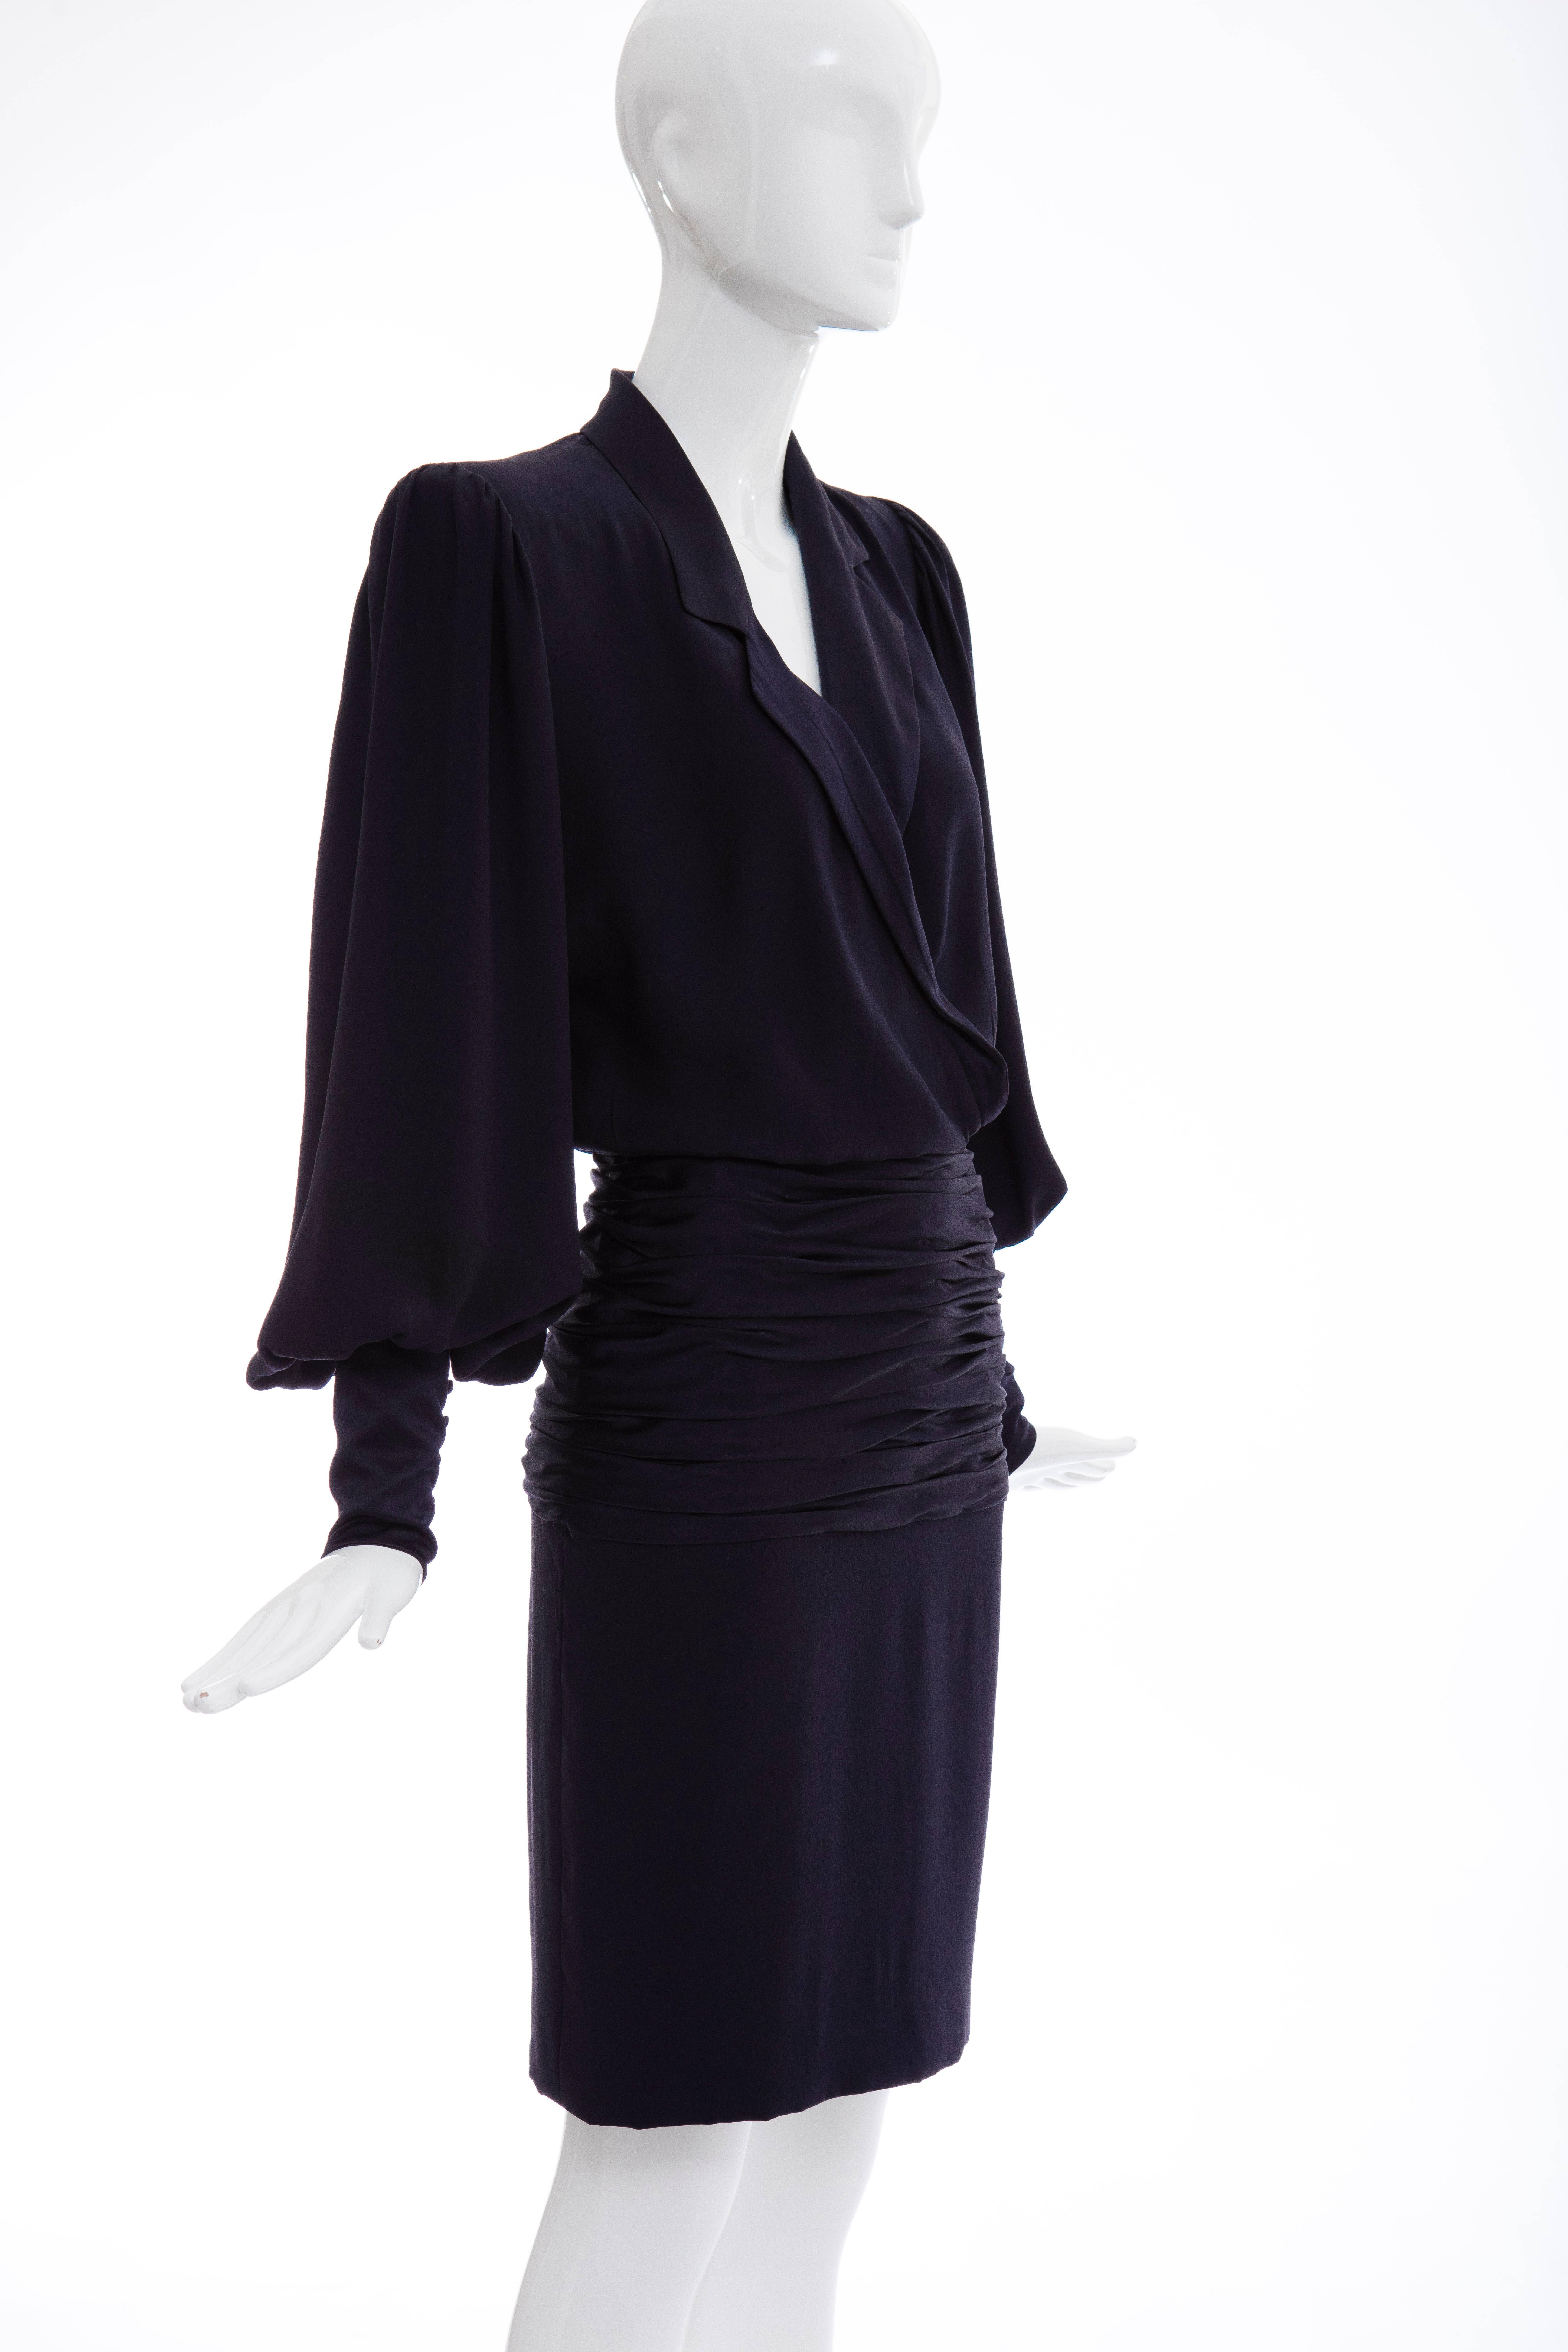 Jean - Louis Scherrer Haute Couture Navy Silk Crepe & Satin Dress, Circa 1980's For Sale 1